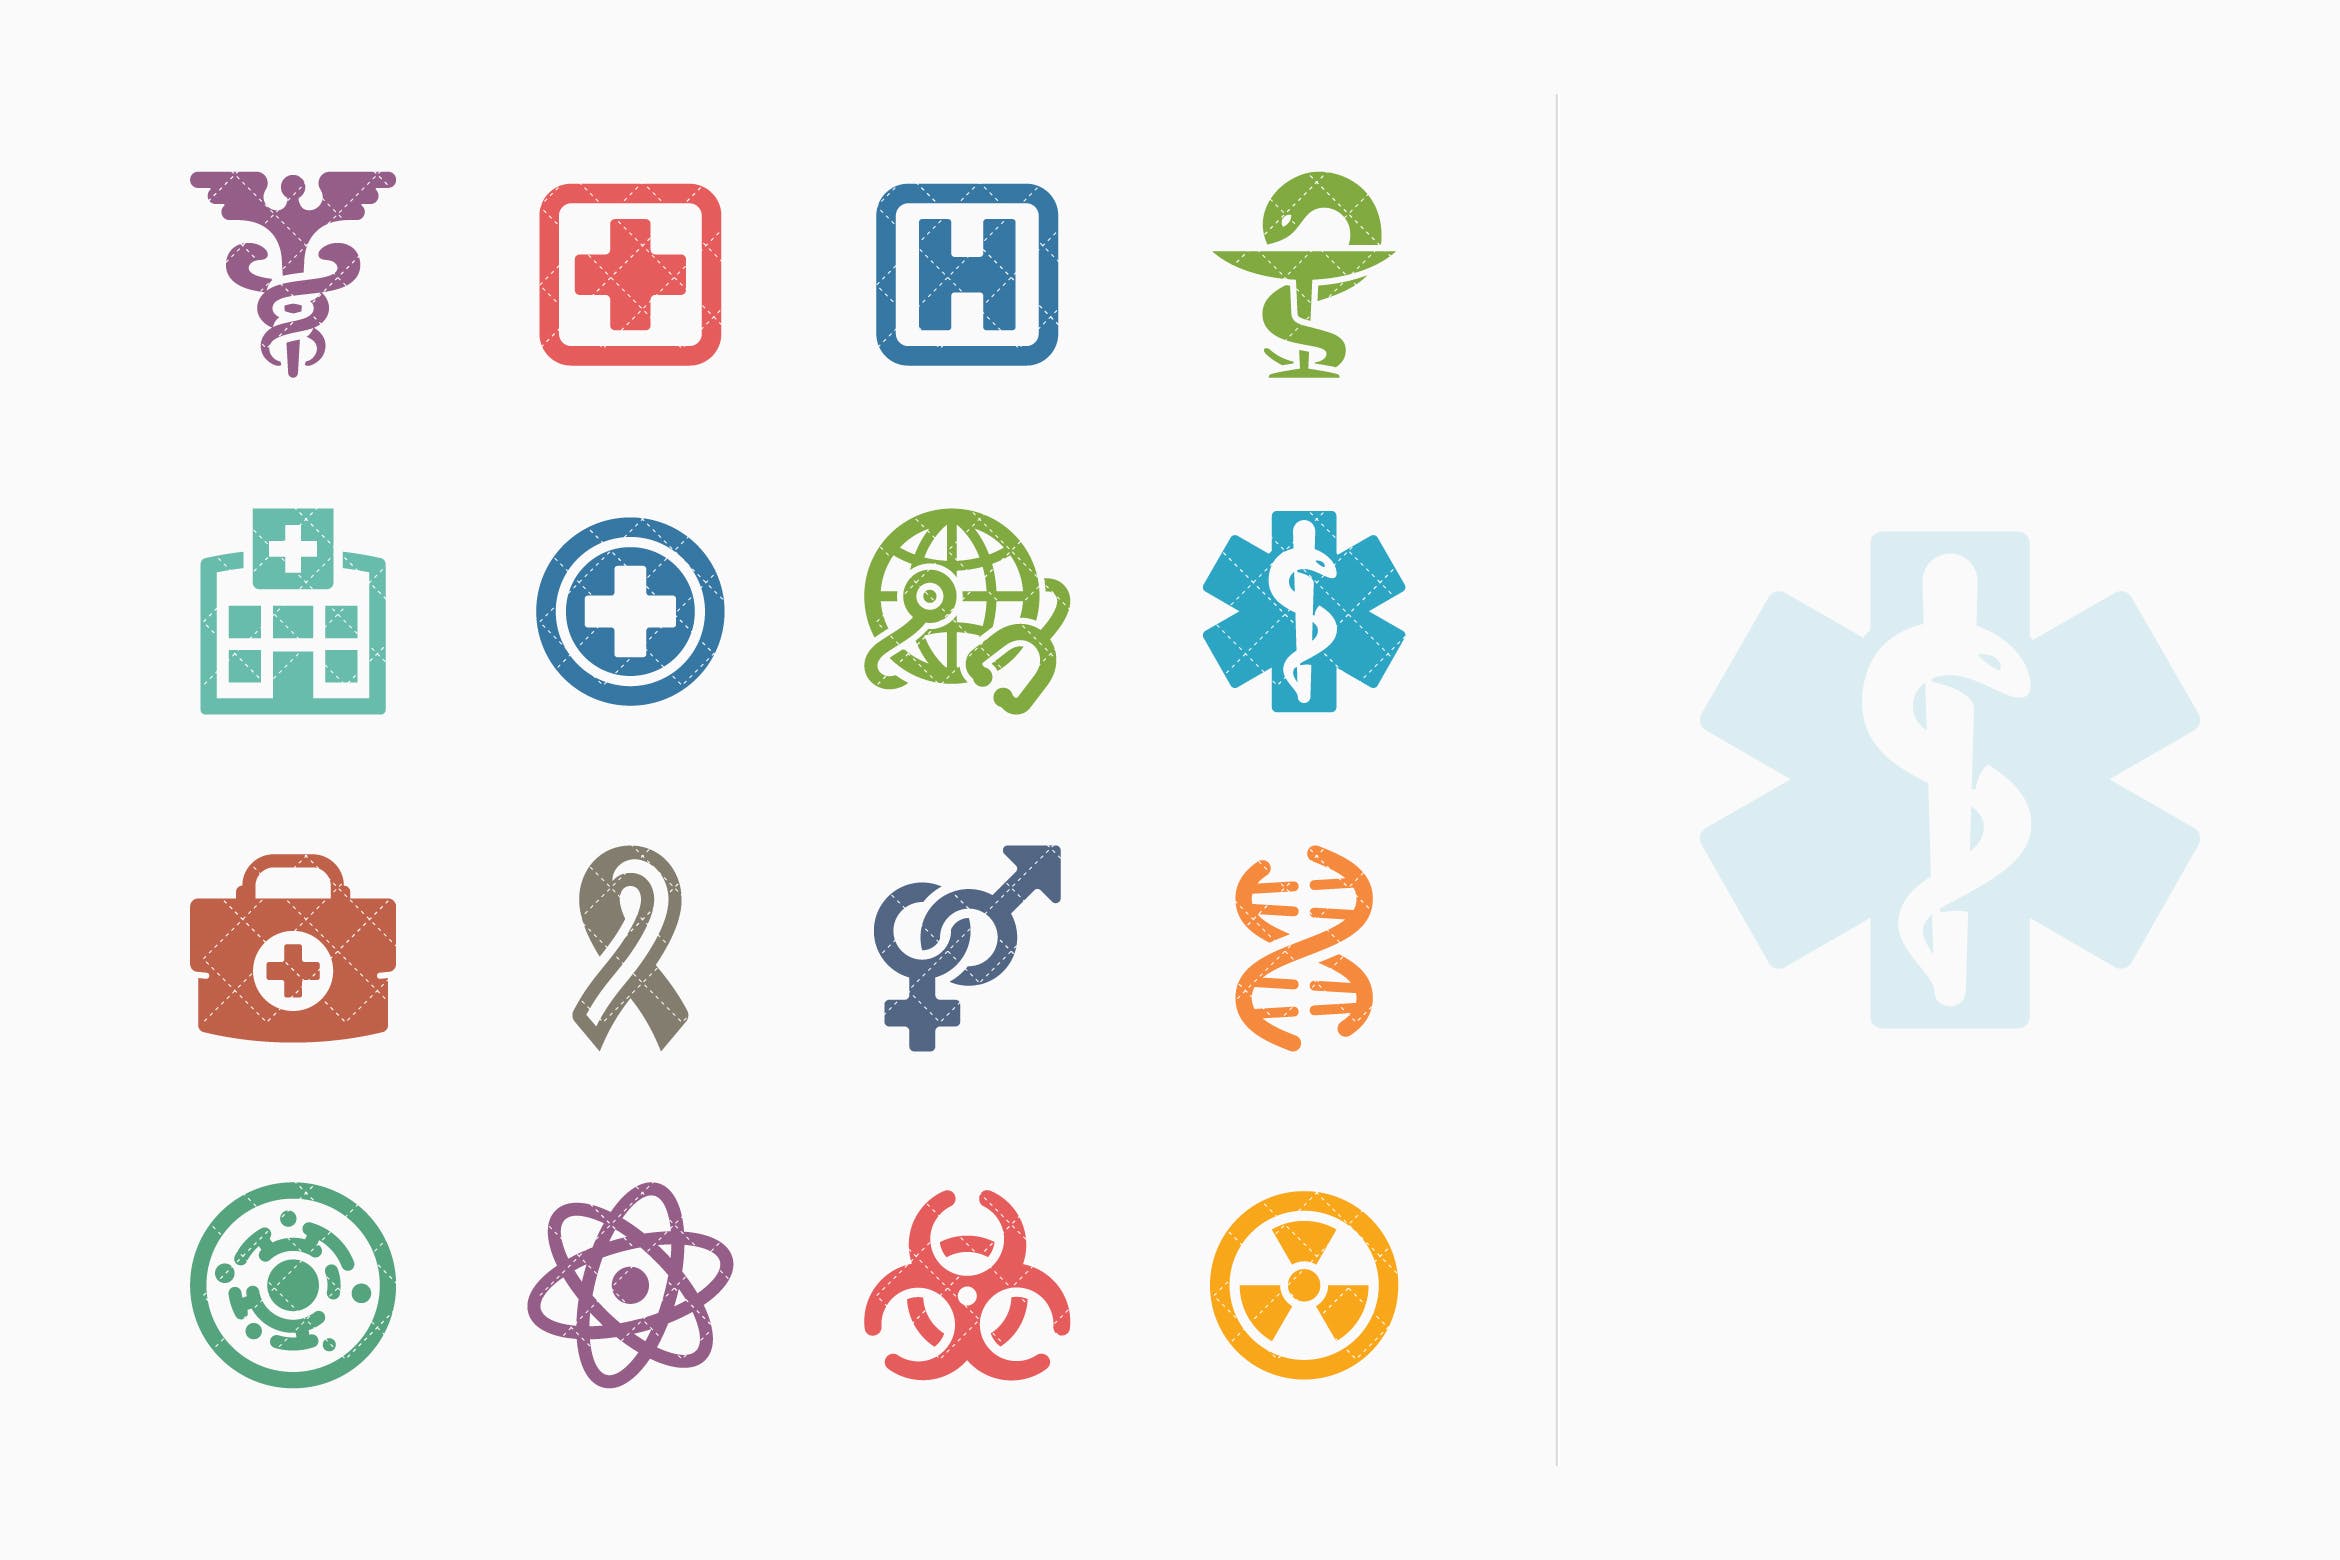 Colored系列-医疗保健主题矢量蚂蚁素材精选图标集v1 Medical & Health Care Icons Set 1 – Colored Series插图